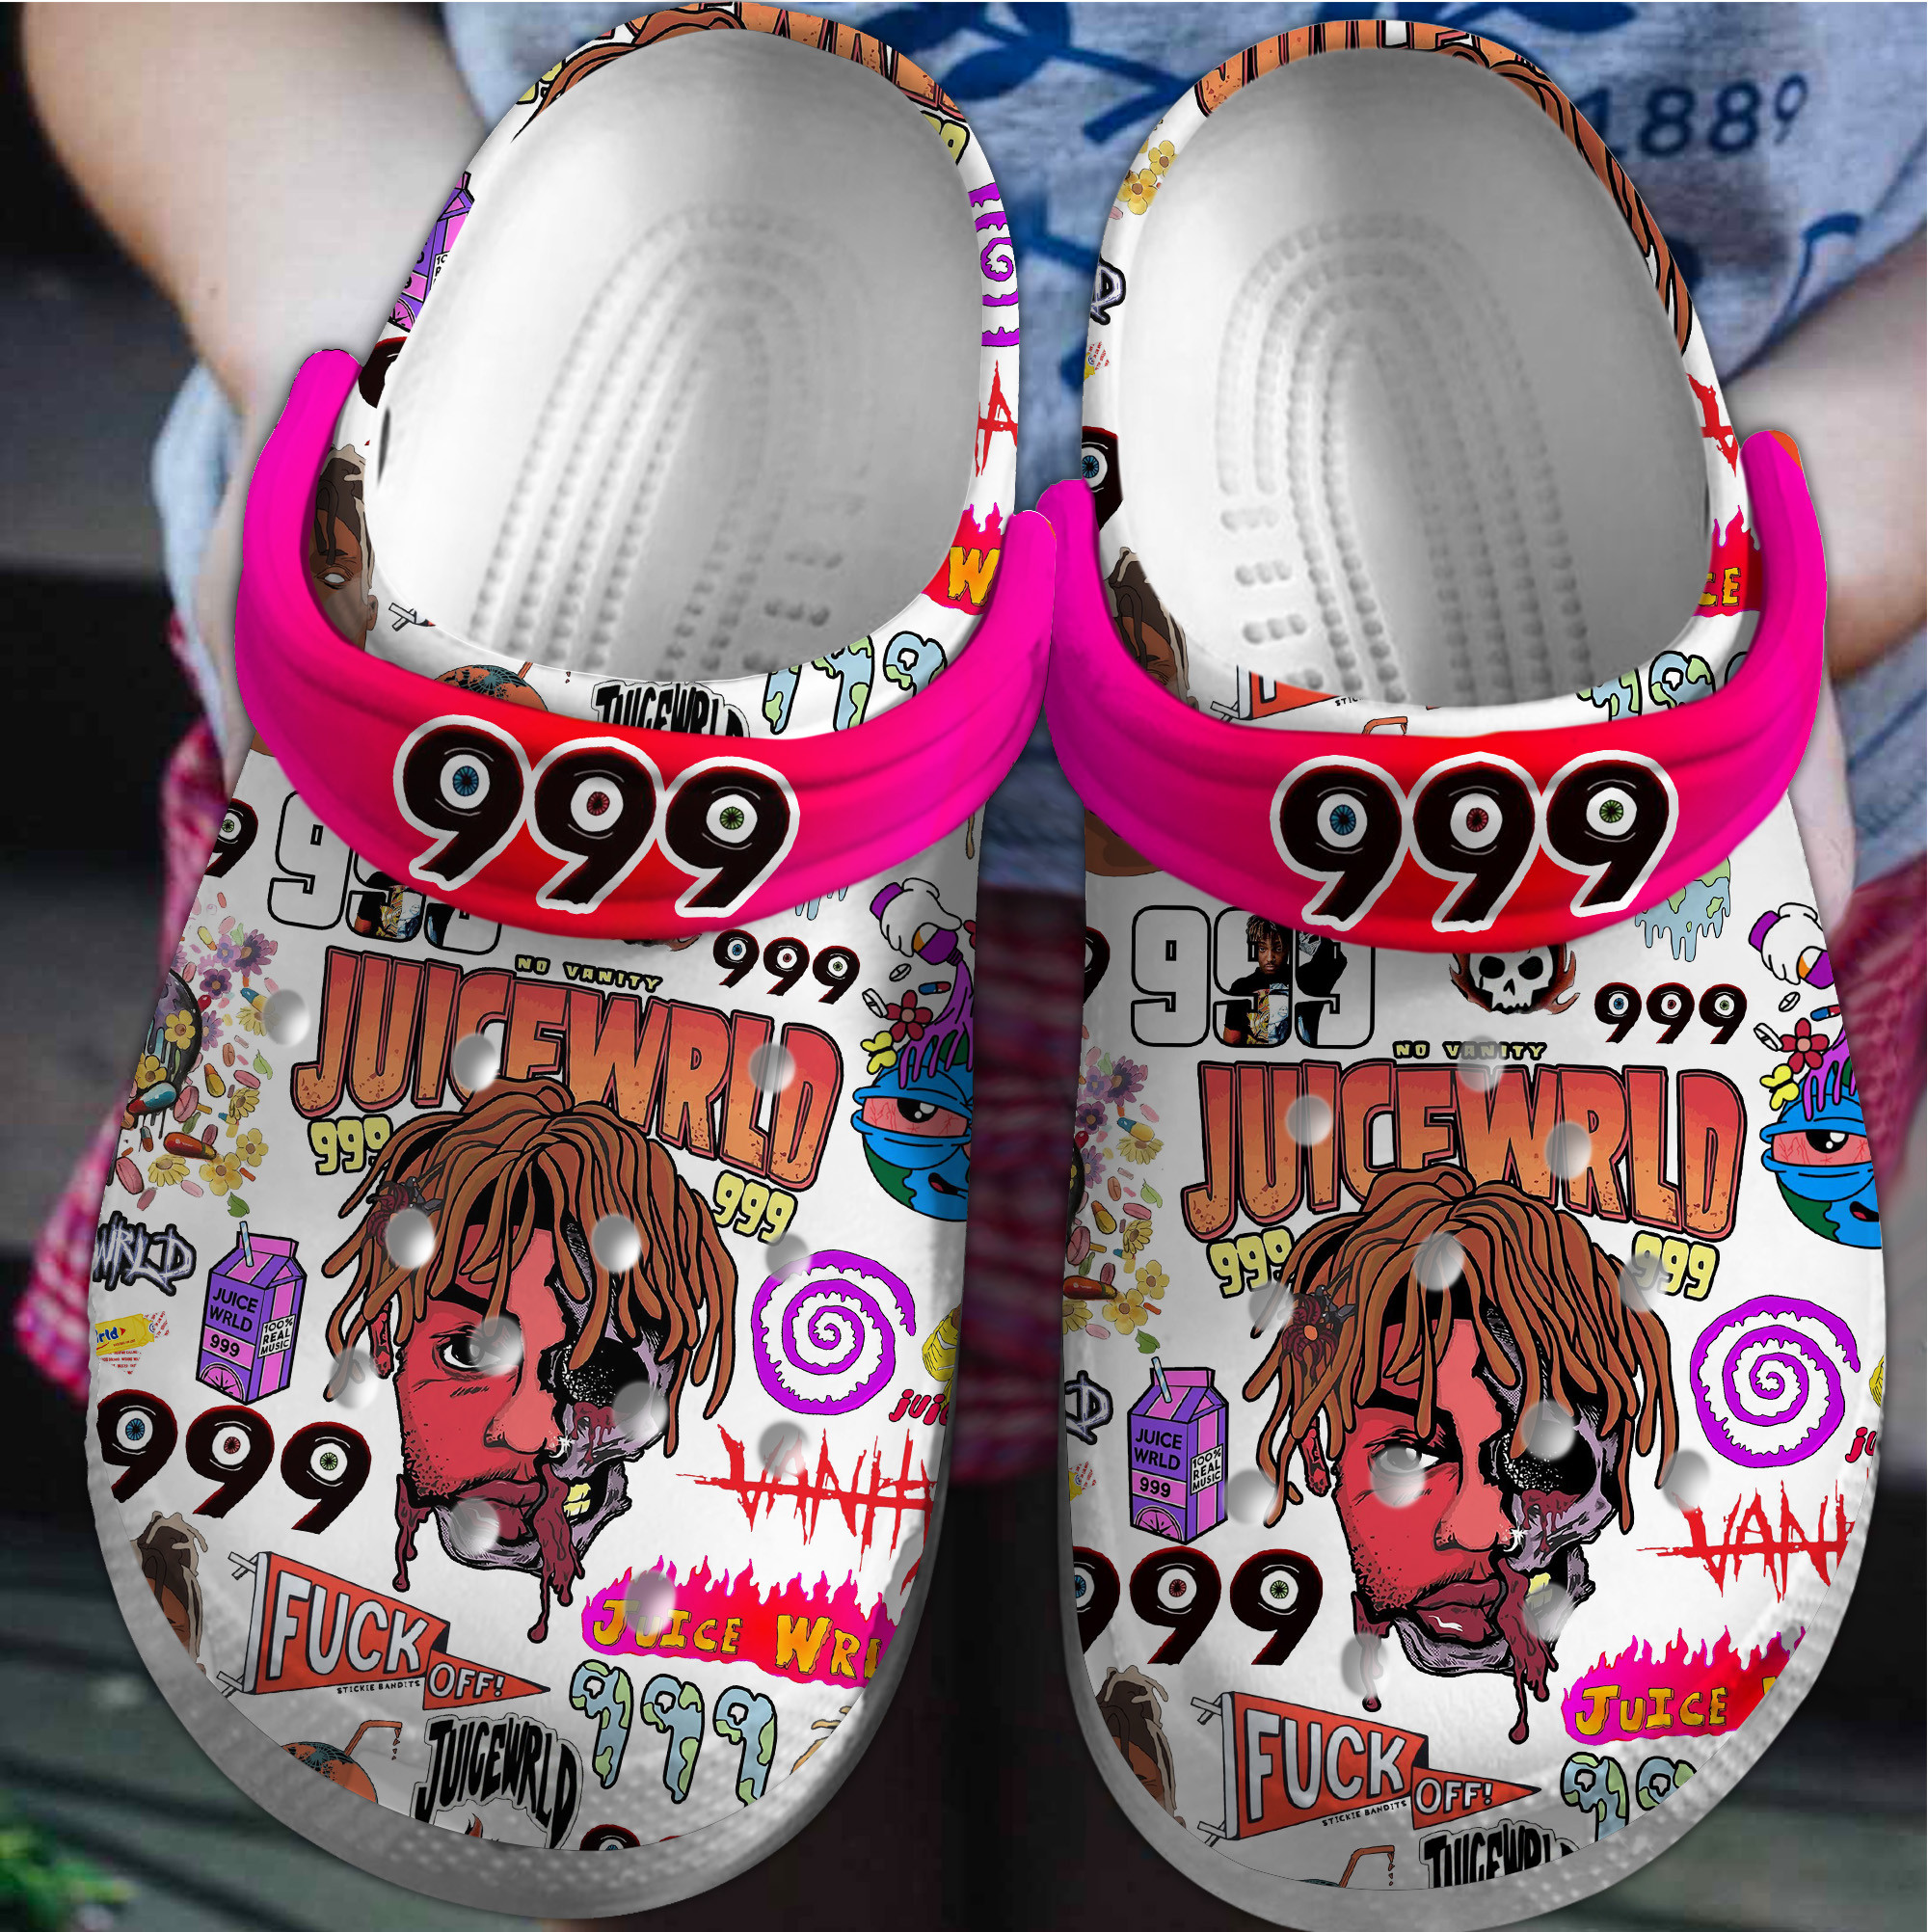 999 Juice Wrld Music Crocs Crocband Clogs Shoes Comfortable For Men Women and Kids